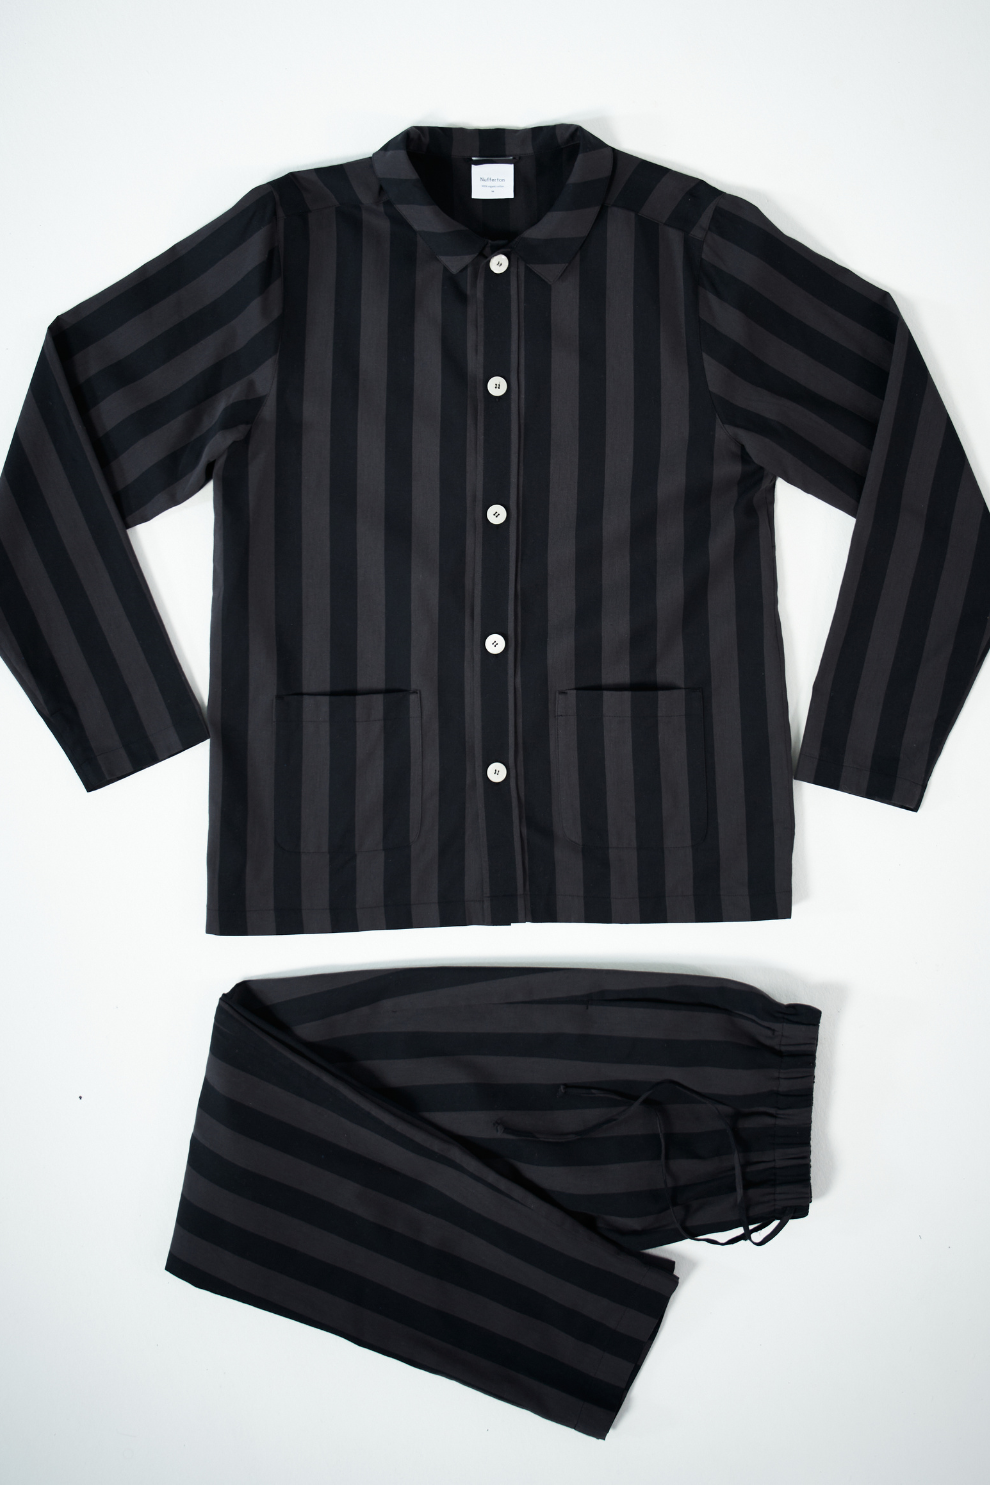 Uno Stripe Black & Black